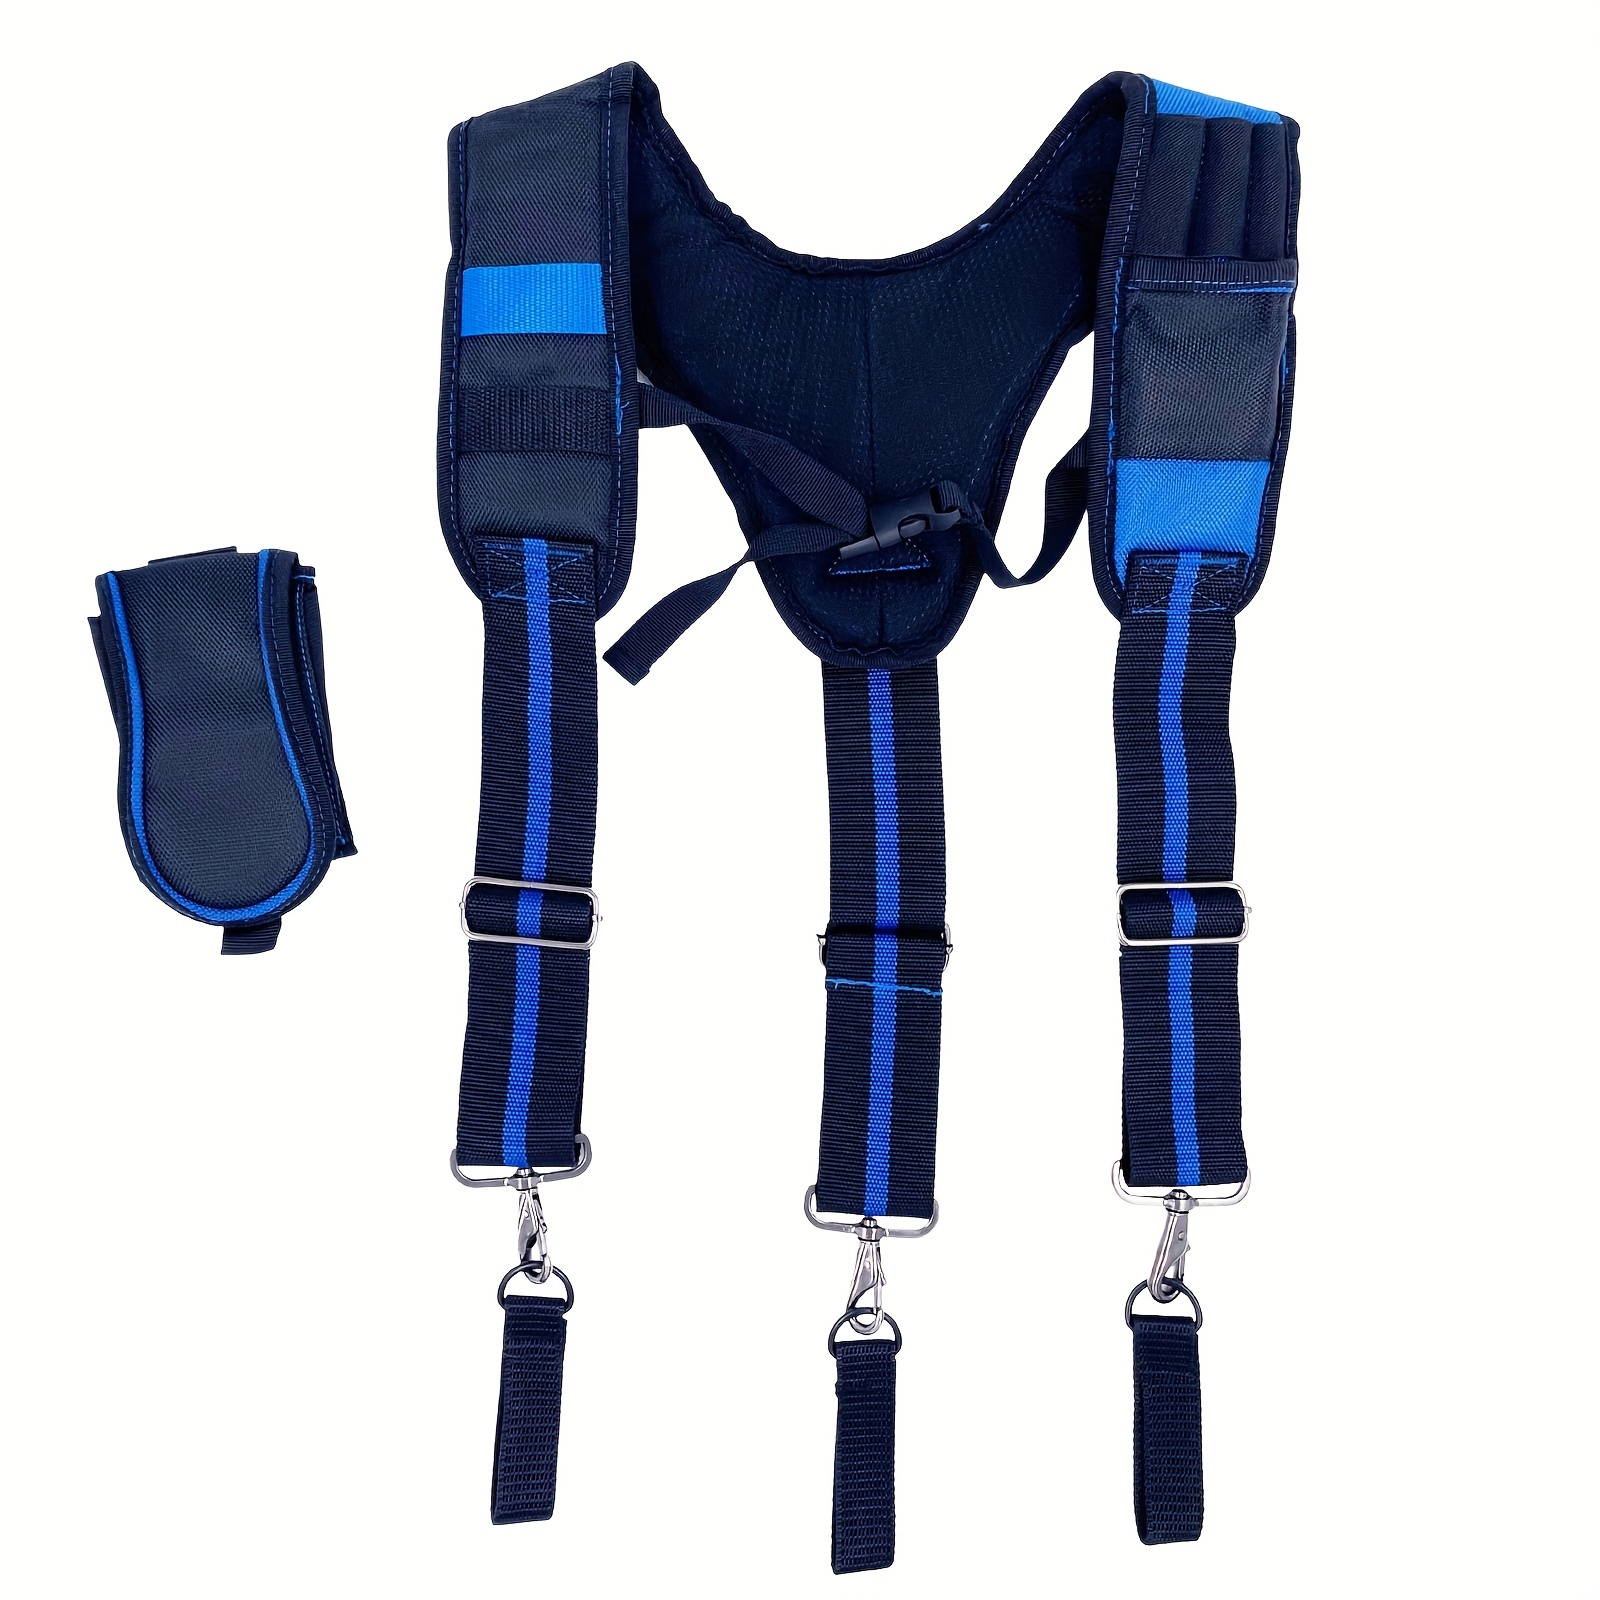 Tactical Suspenders Duty Belt Harness Padded Adjustable Tool Belt